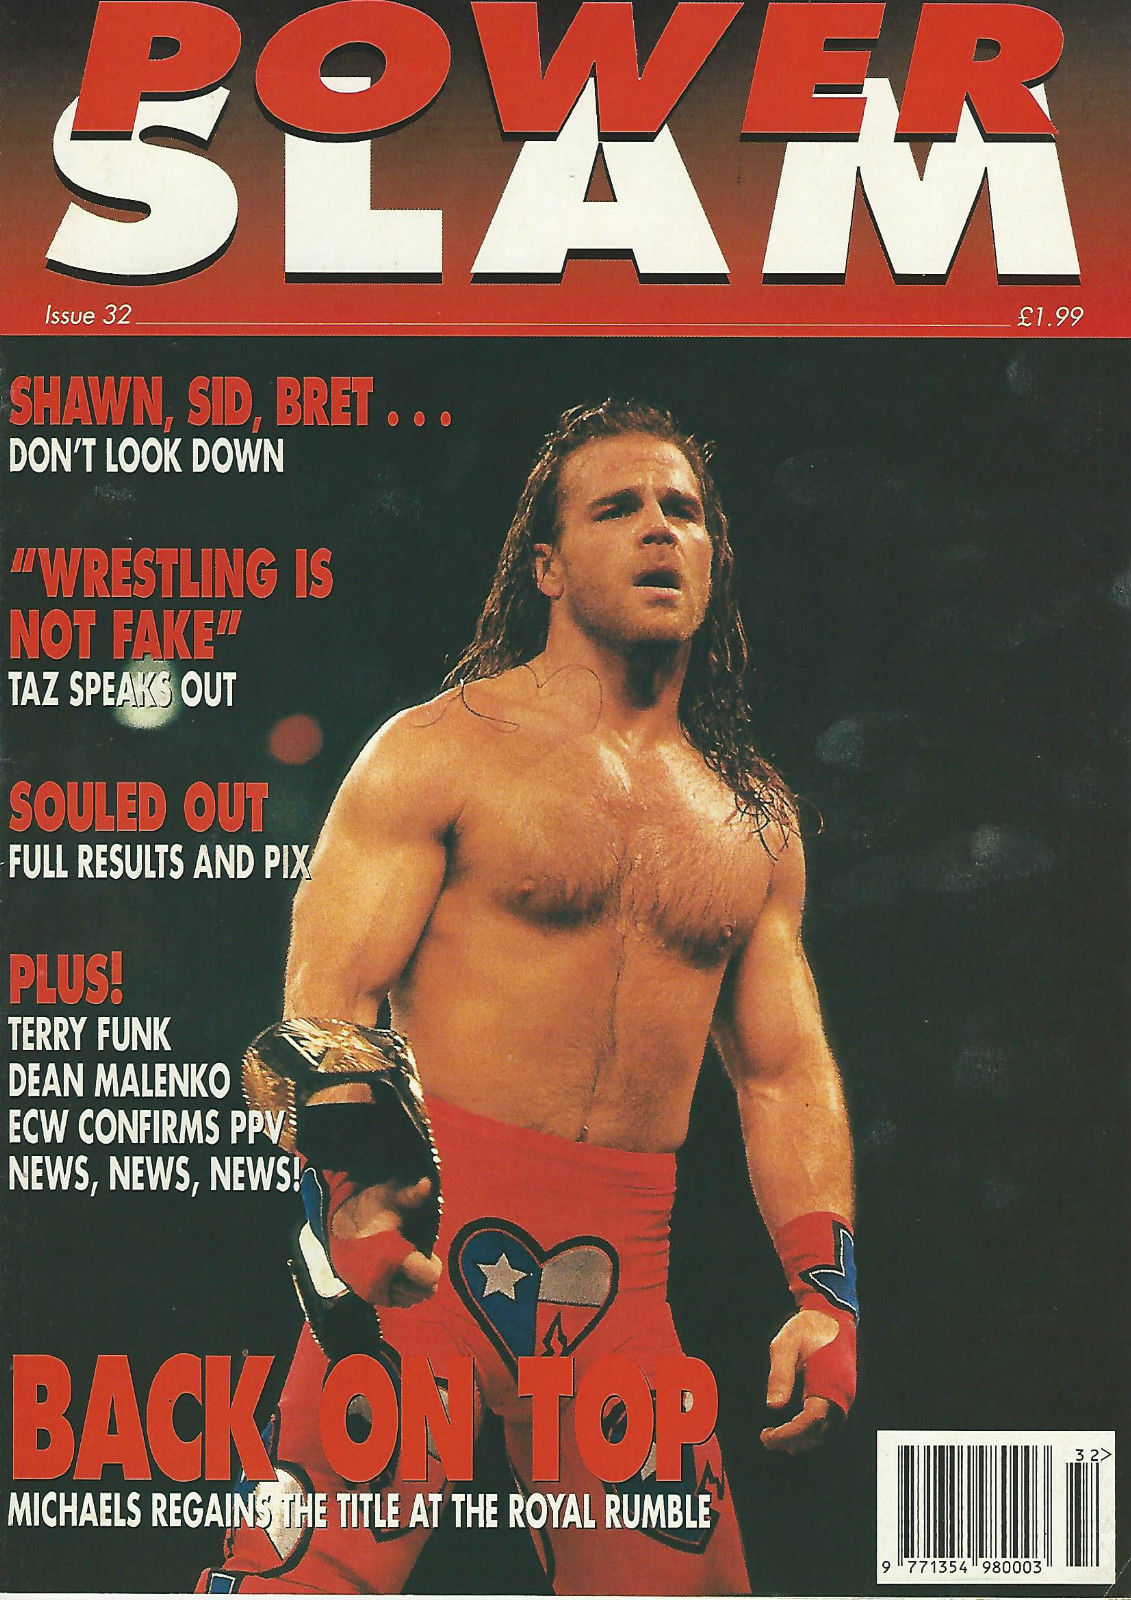 Power Slam Issue 32